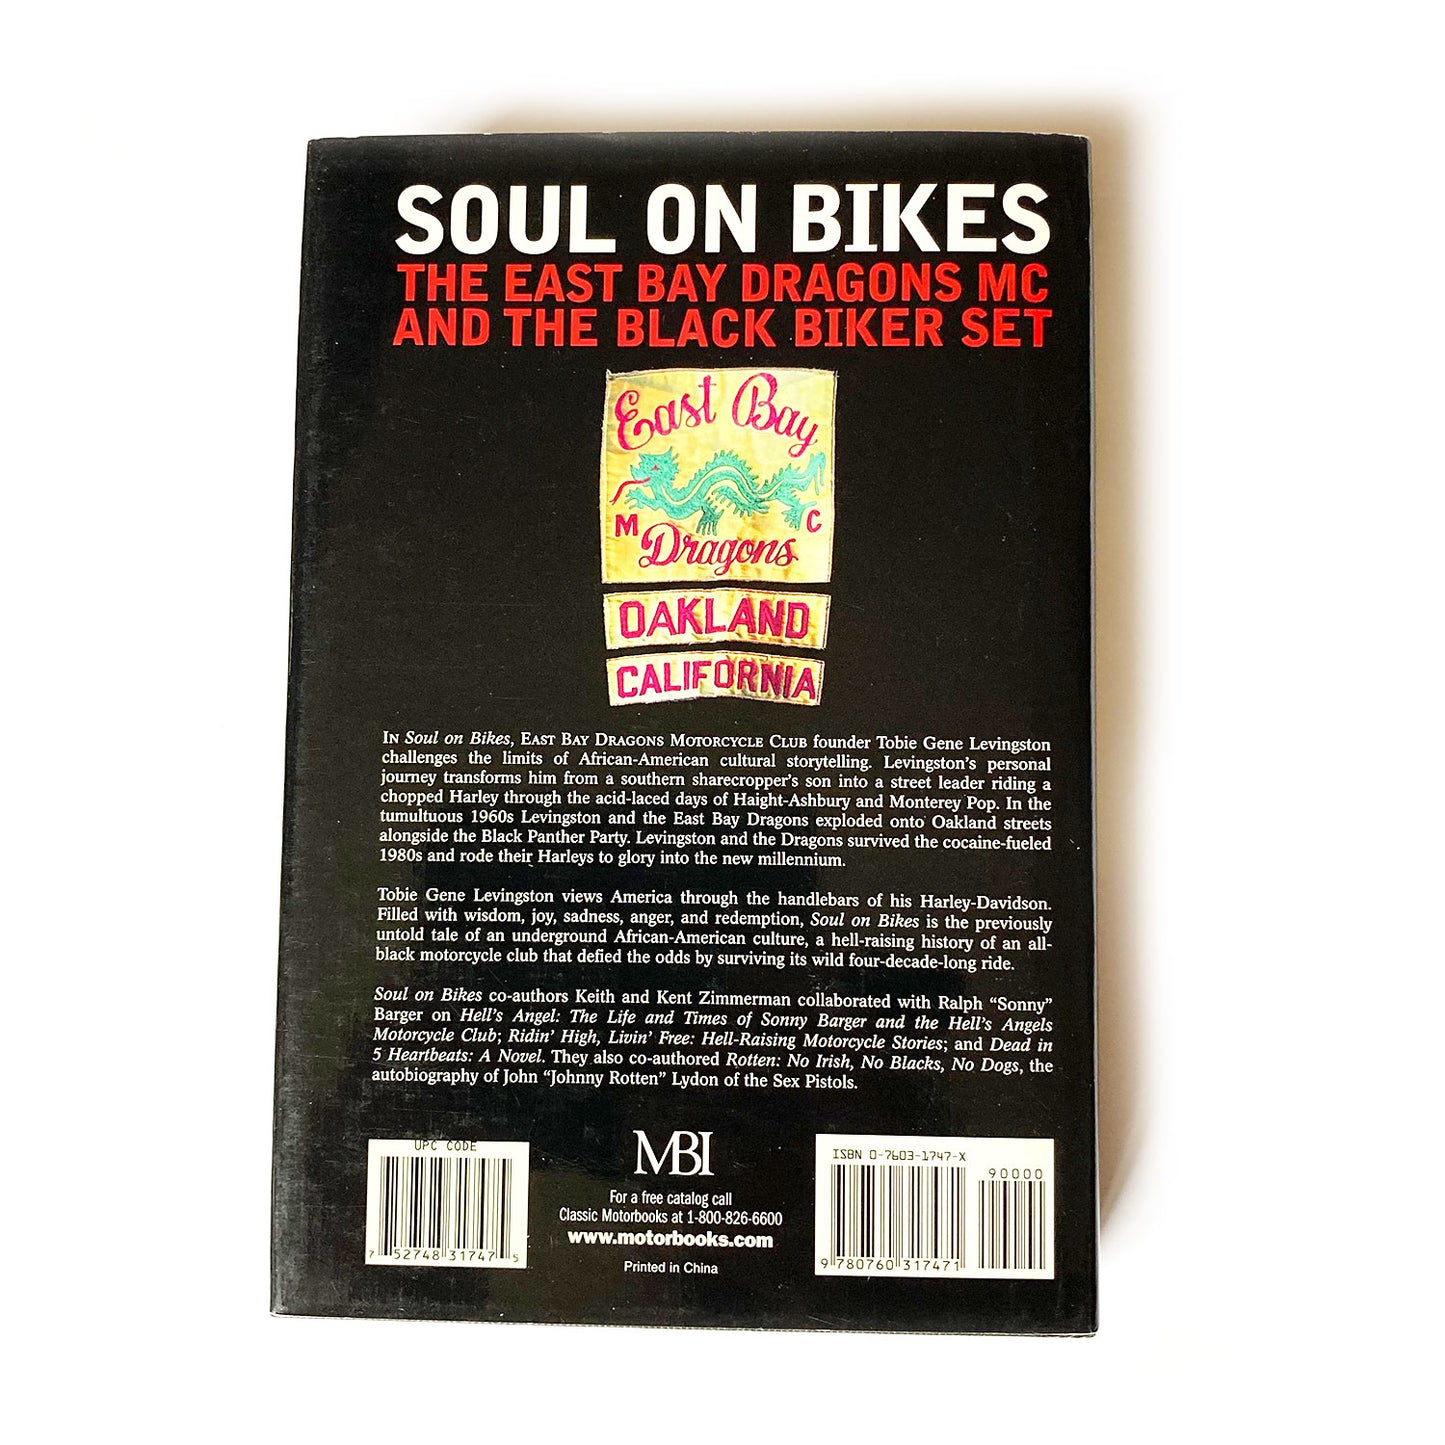 Soul on Bikes, The East Bay Dragons MC and the black biker set, Tobie Gene Livingston